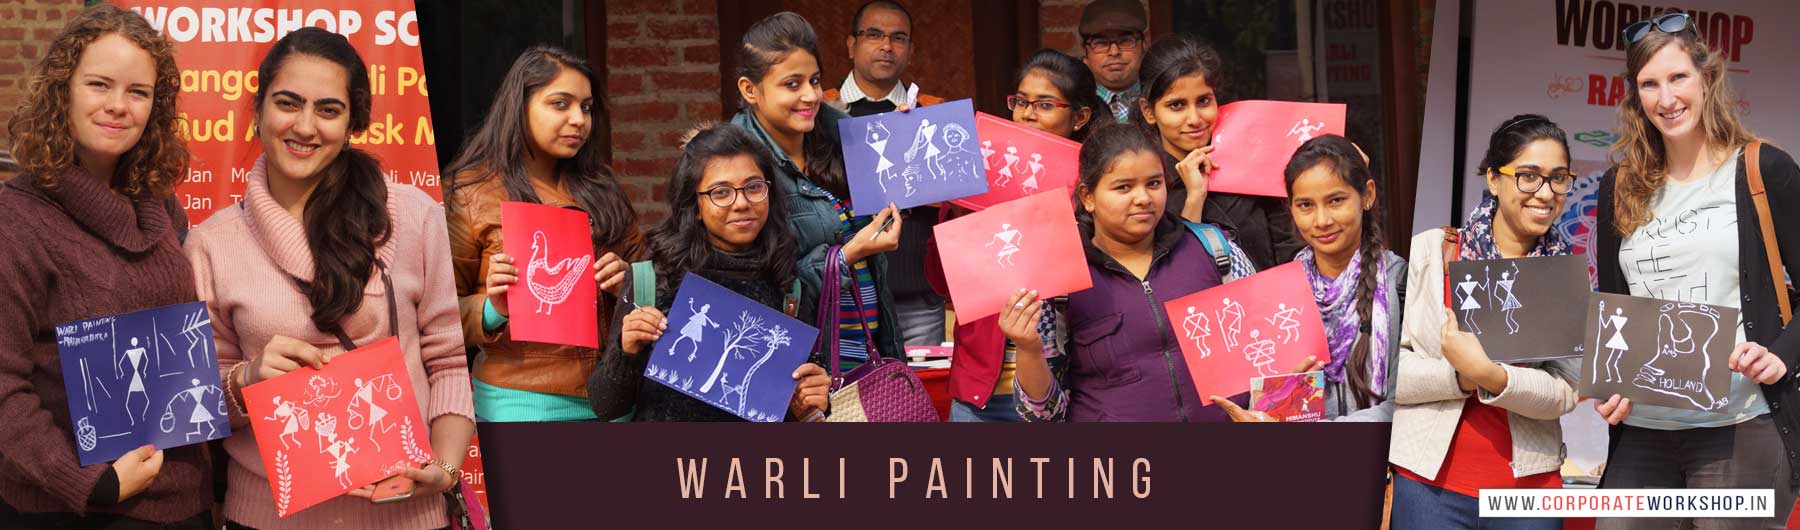 Drawing, Painting, Art & Craft Activities and Workshop for Corporate Employees, School Students, Collges, NGO, Club, in Delhi, Gurgaon, Gurugram, Noida, Chandigarh, Bengaluru, India